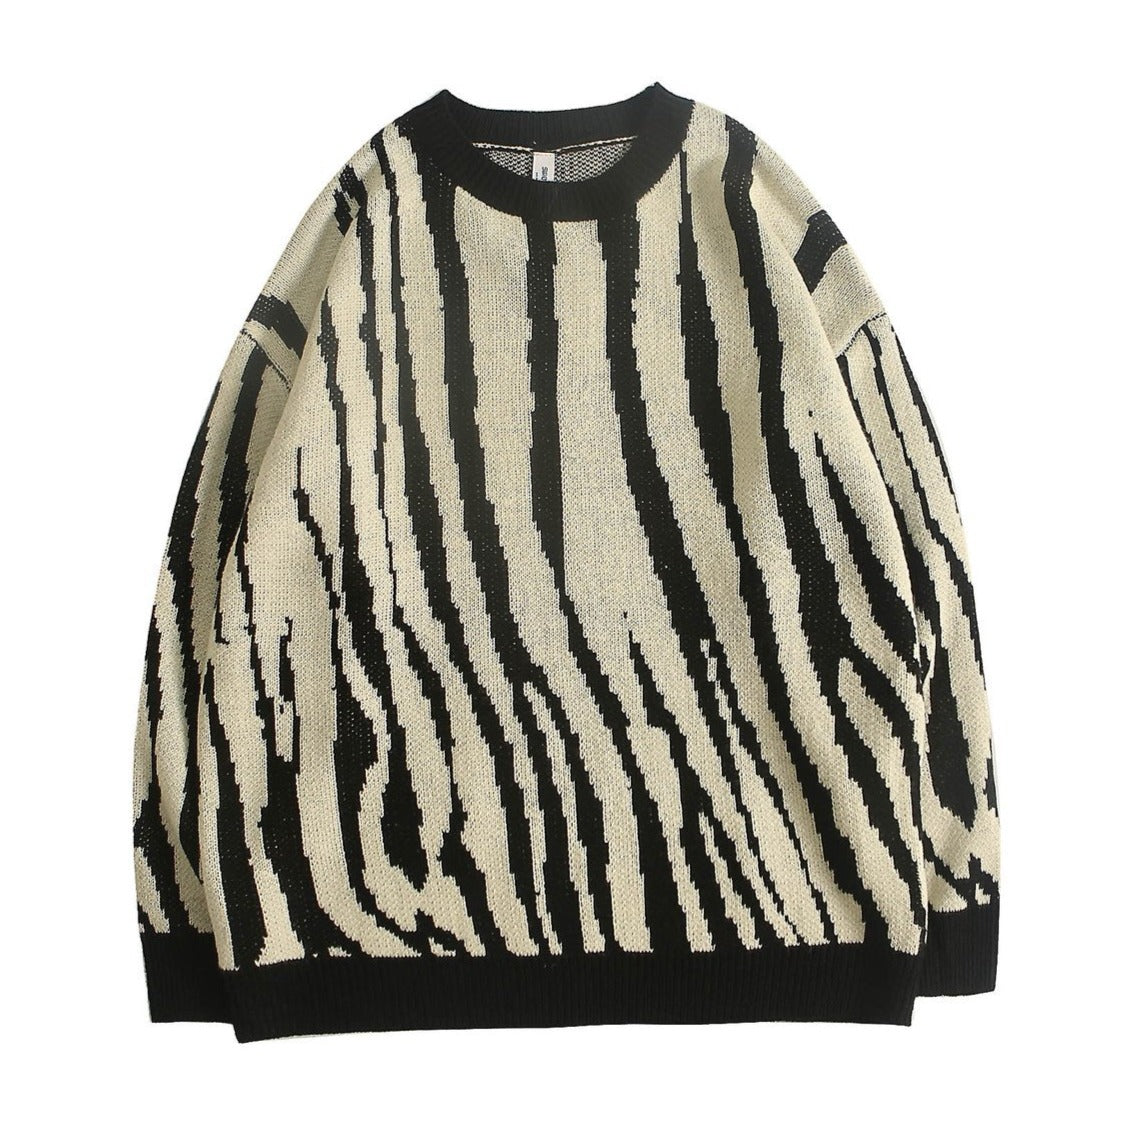 Contrast Grain Zebra Sweater - Black / L - SWEATSHIRT